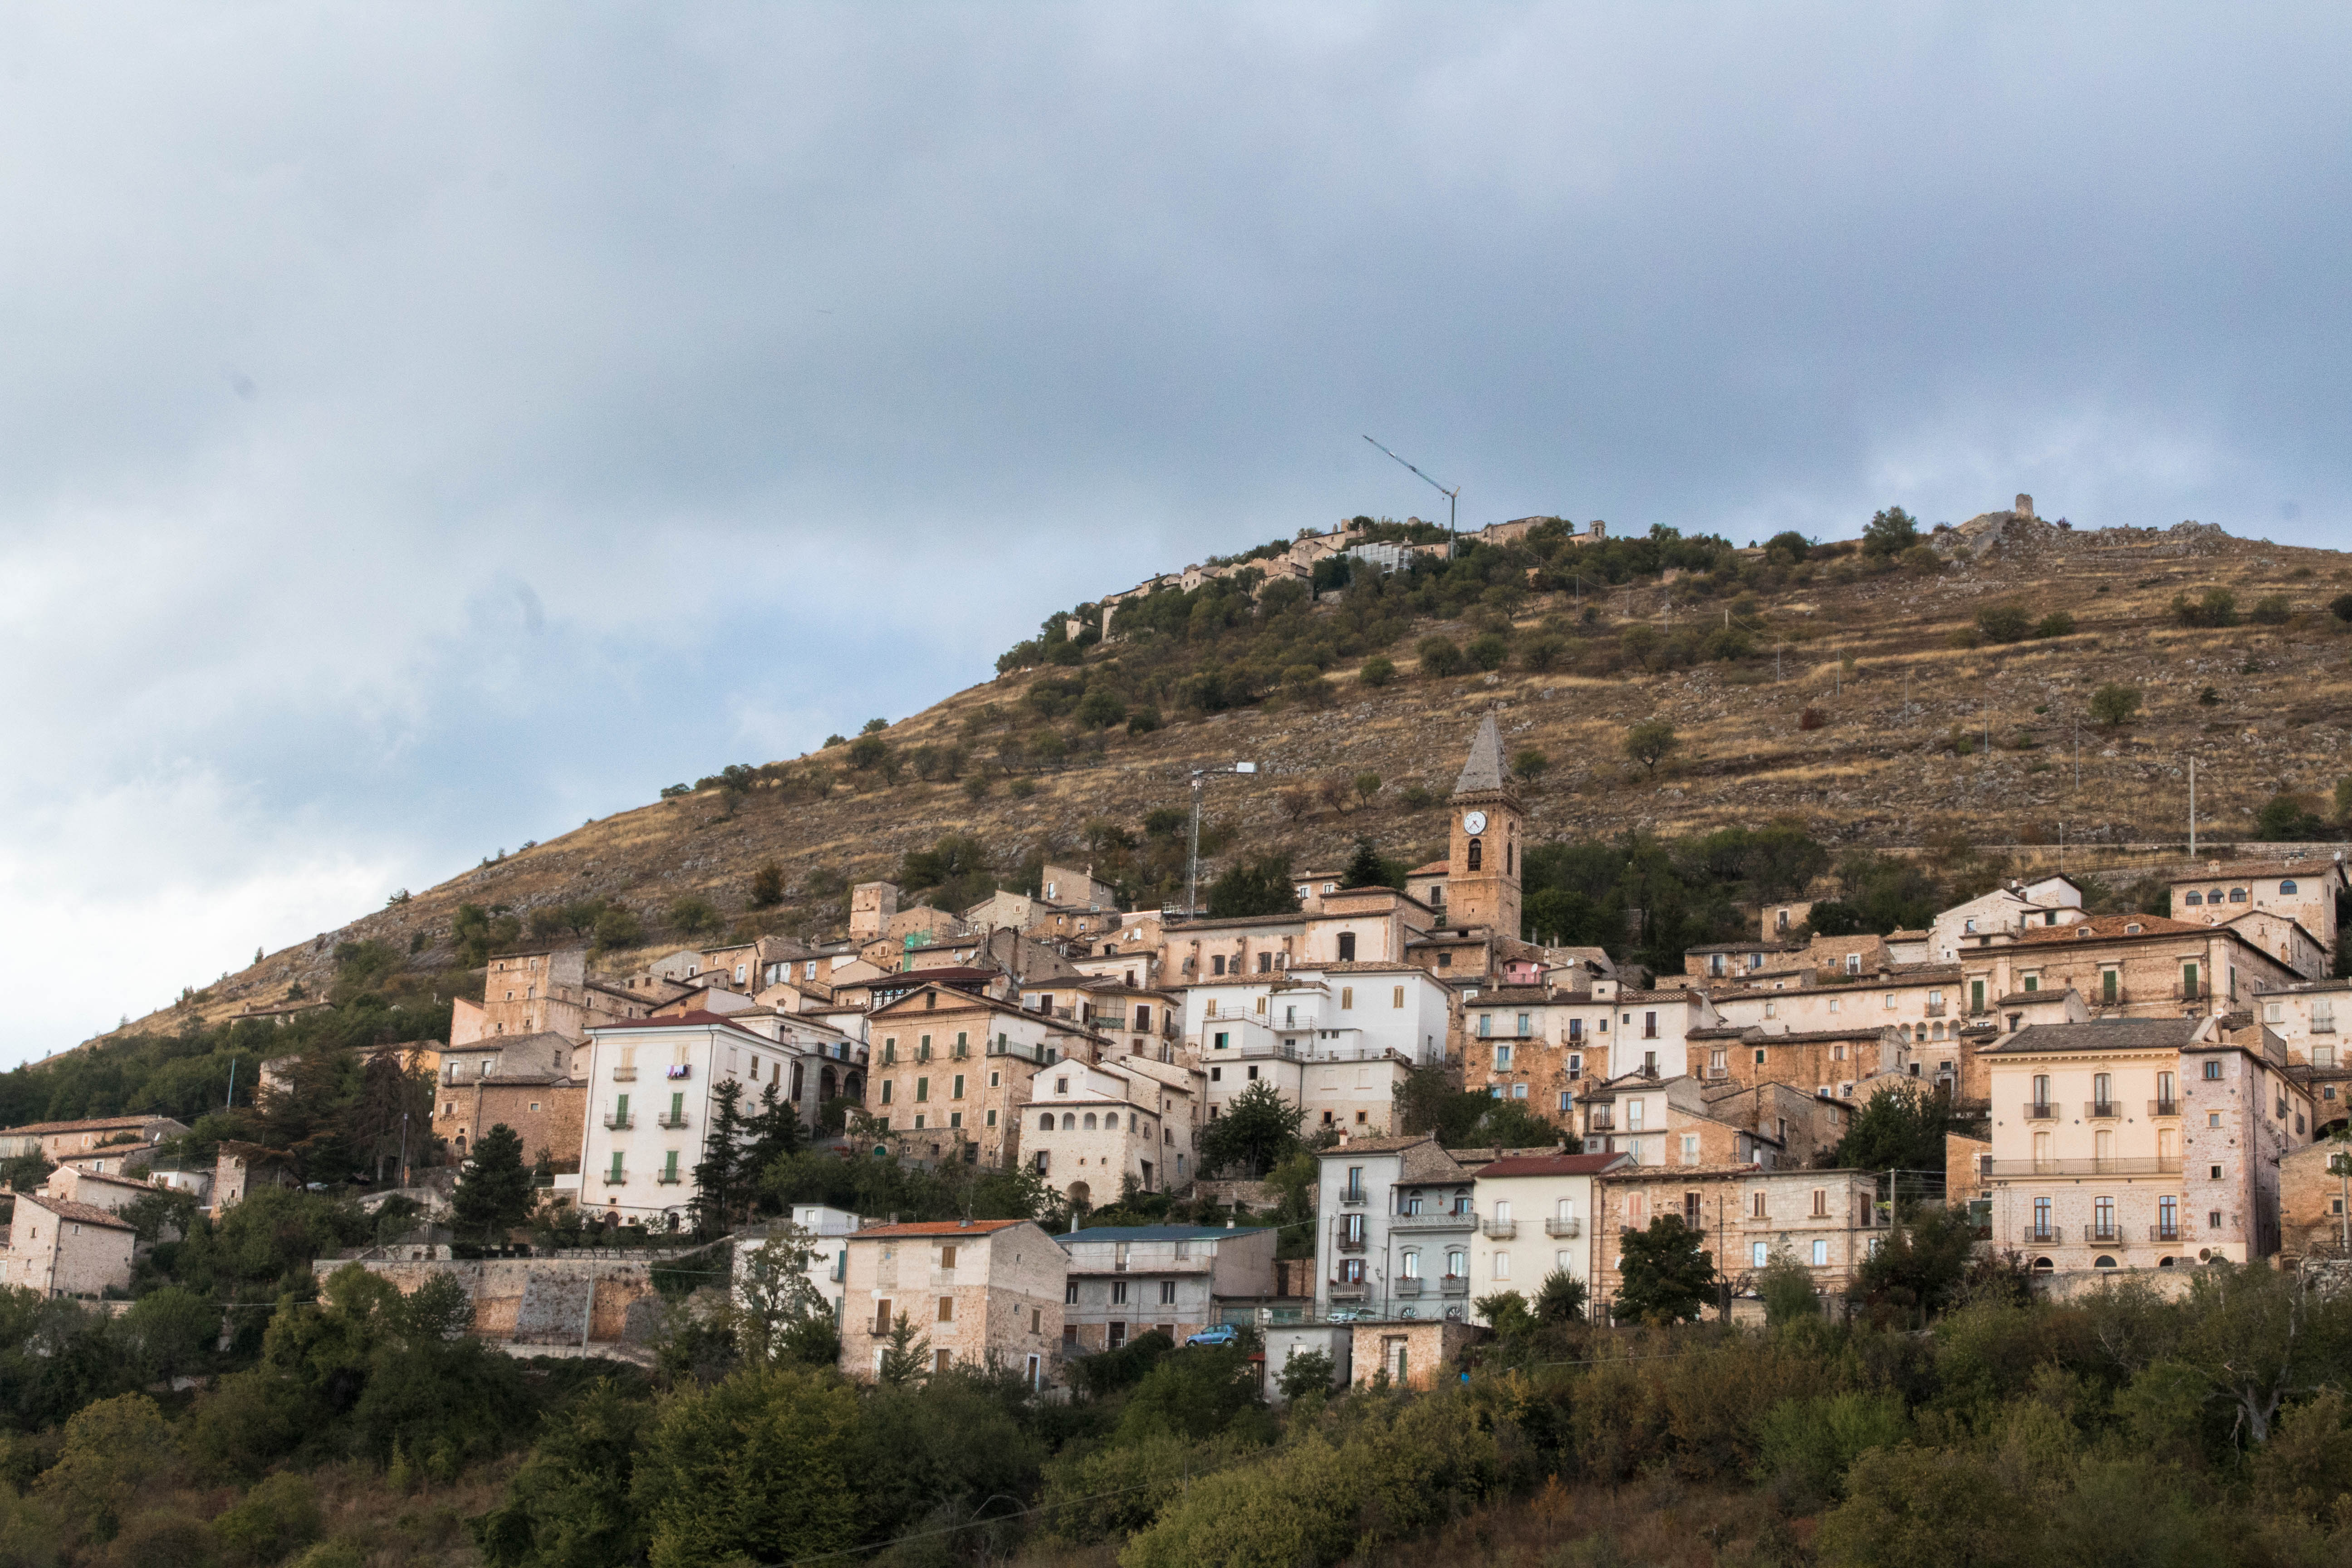 A small town called Calascio, Italy in Abruzzo